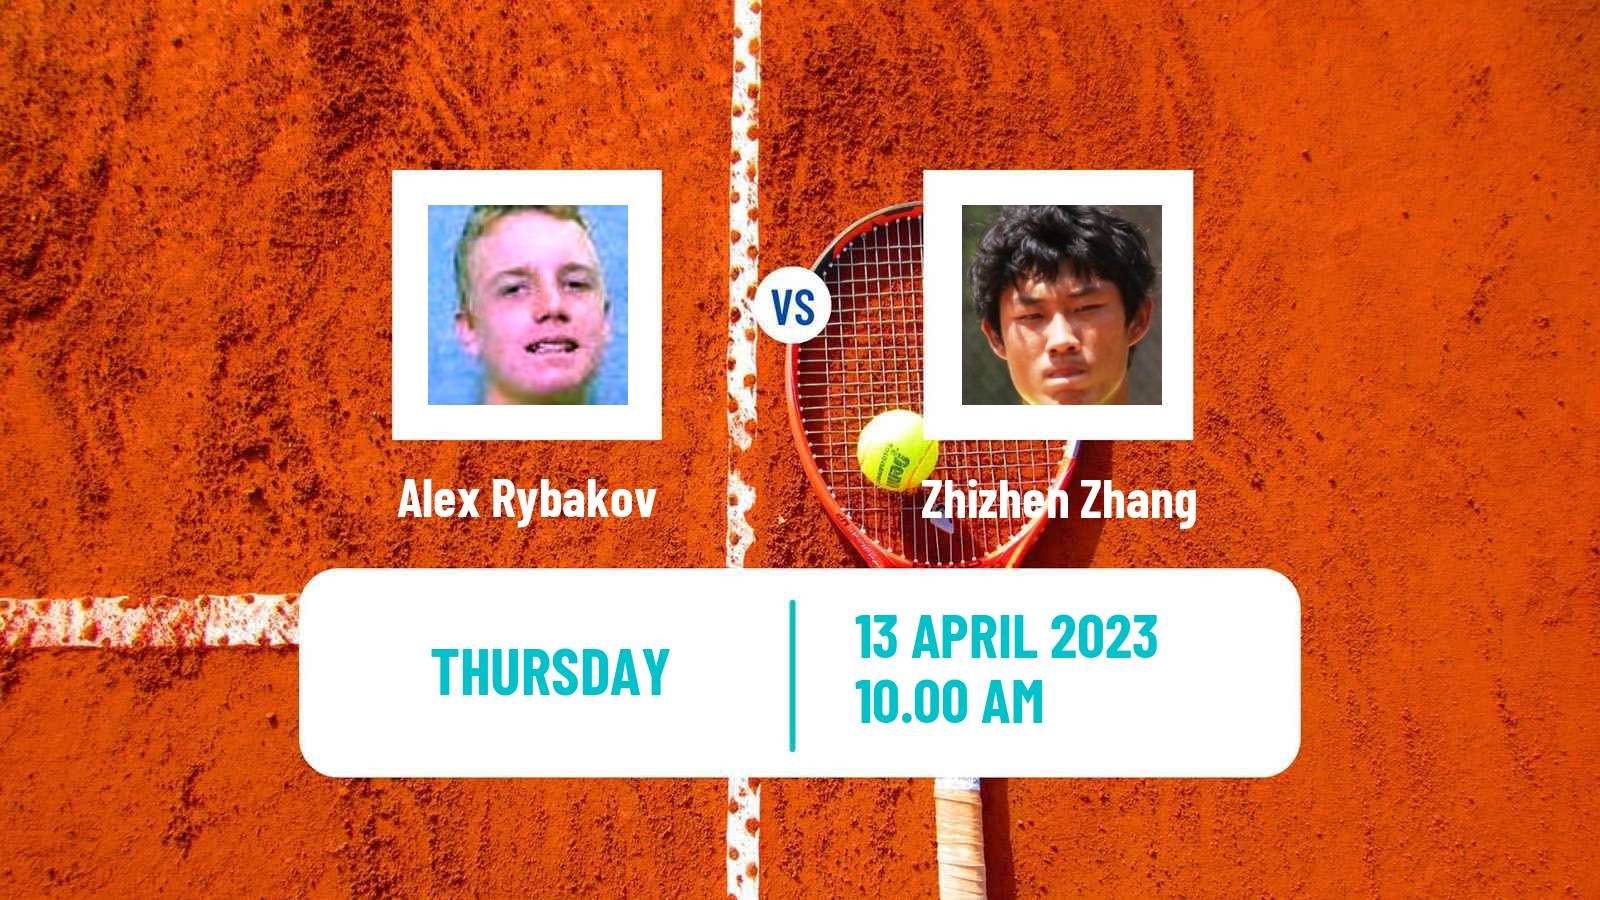 Tennis ATP Challenger Alex Rybakov - Zhizhen Zhang